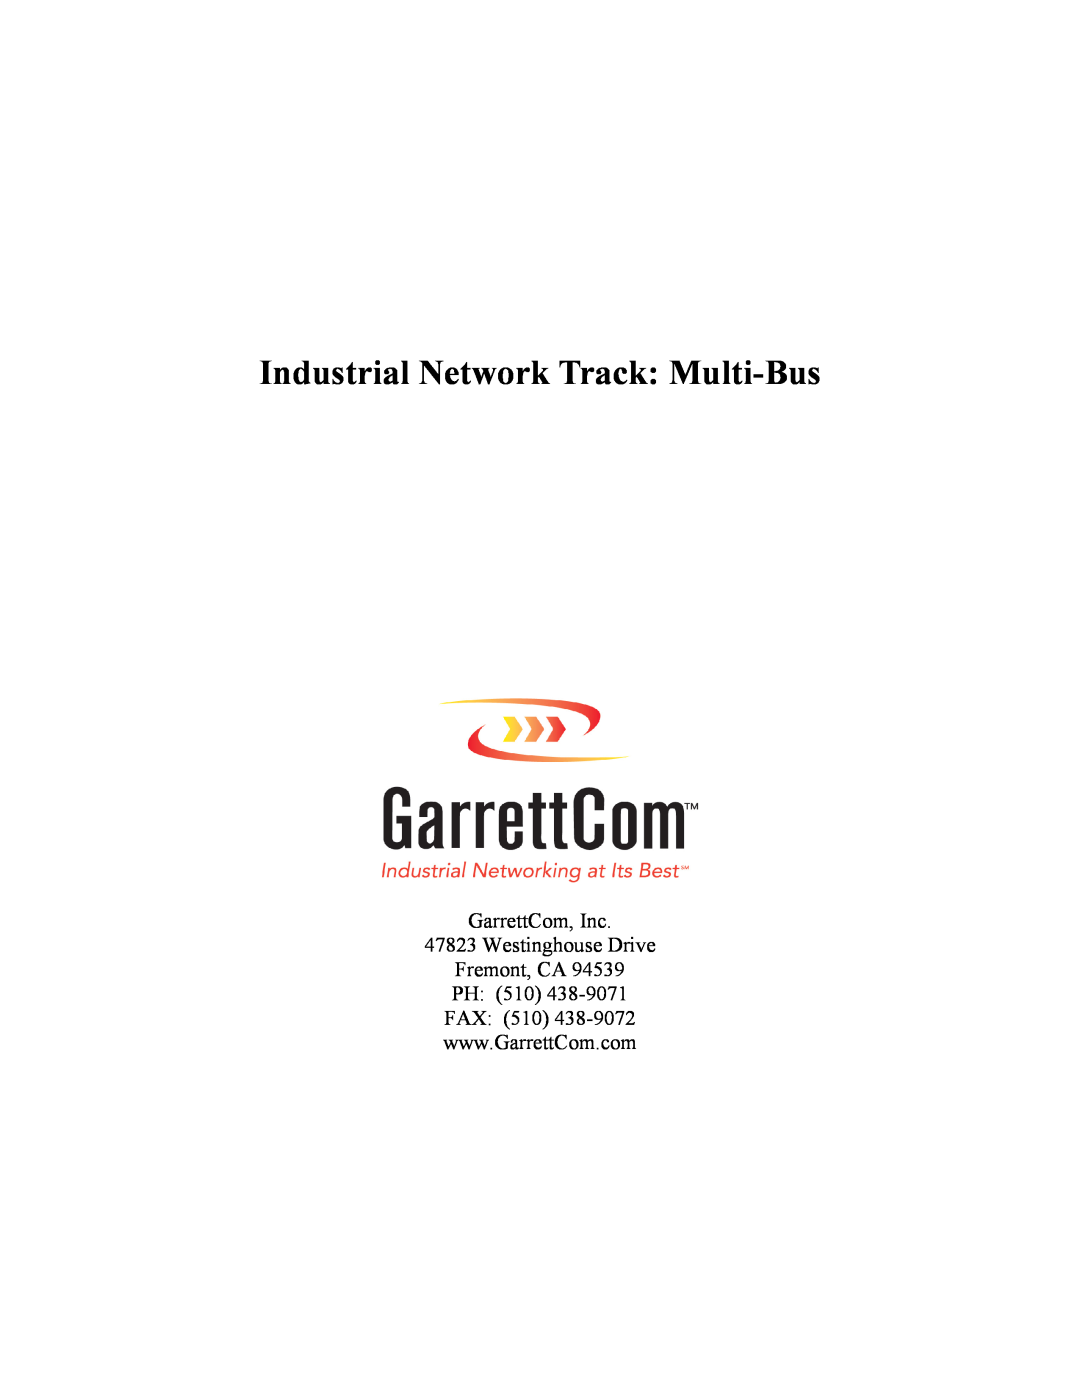 GarrettCom OSI manual Industrial Network Track Multi-Bus, GarrettCom, Inc 47823 Westinghouse Drive Fremont, CA 